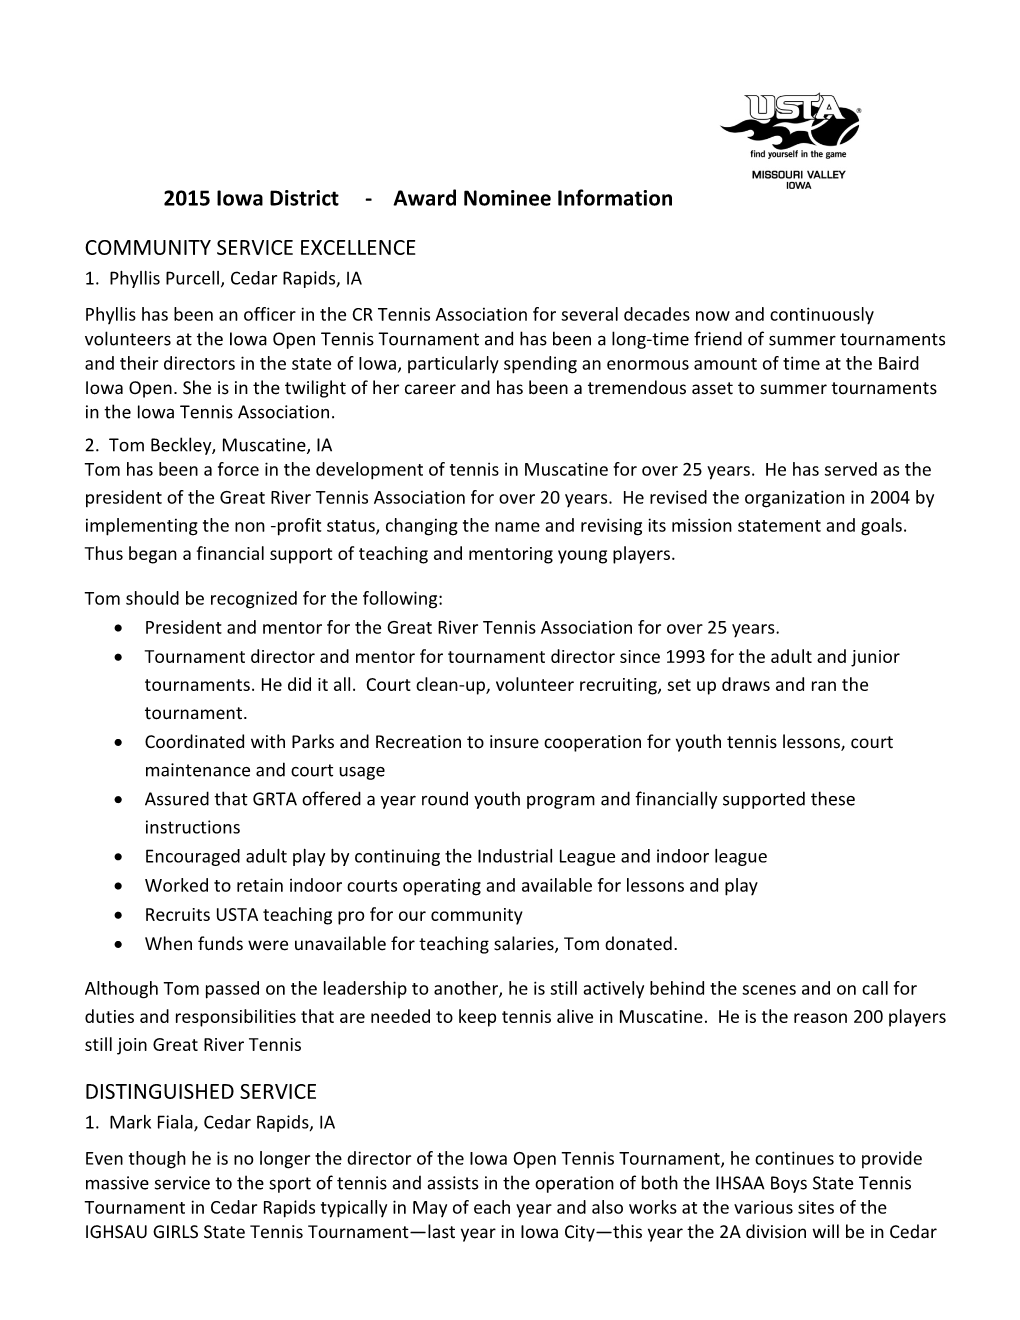 2015 Iowa District - Award Nominee Information